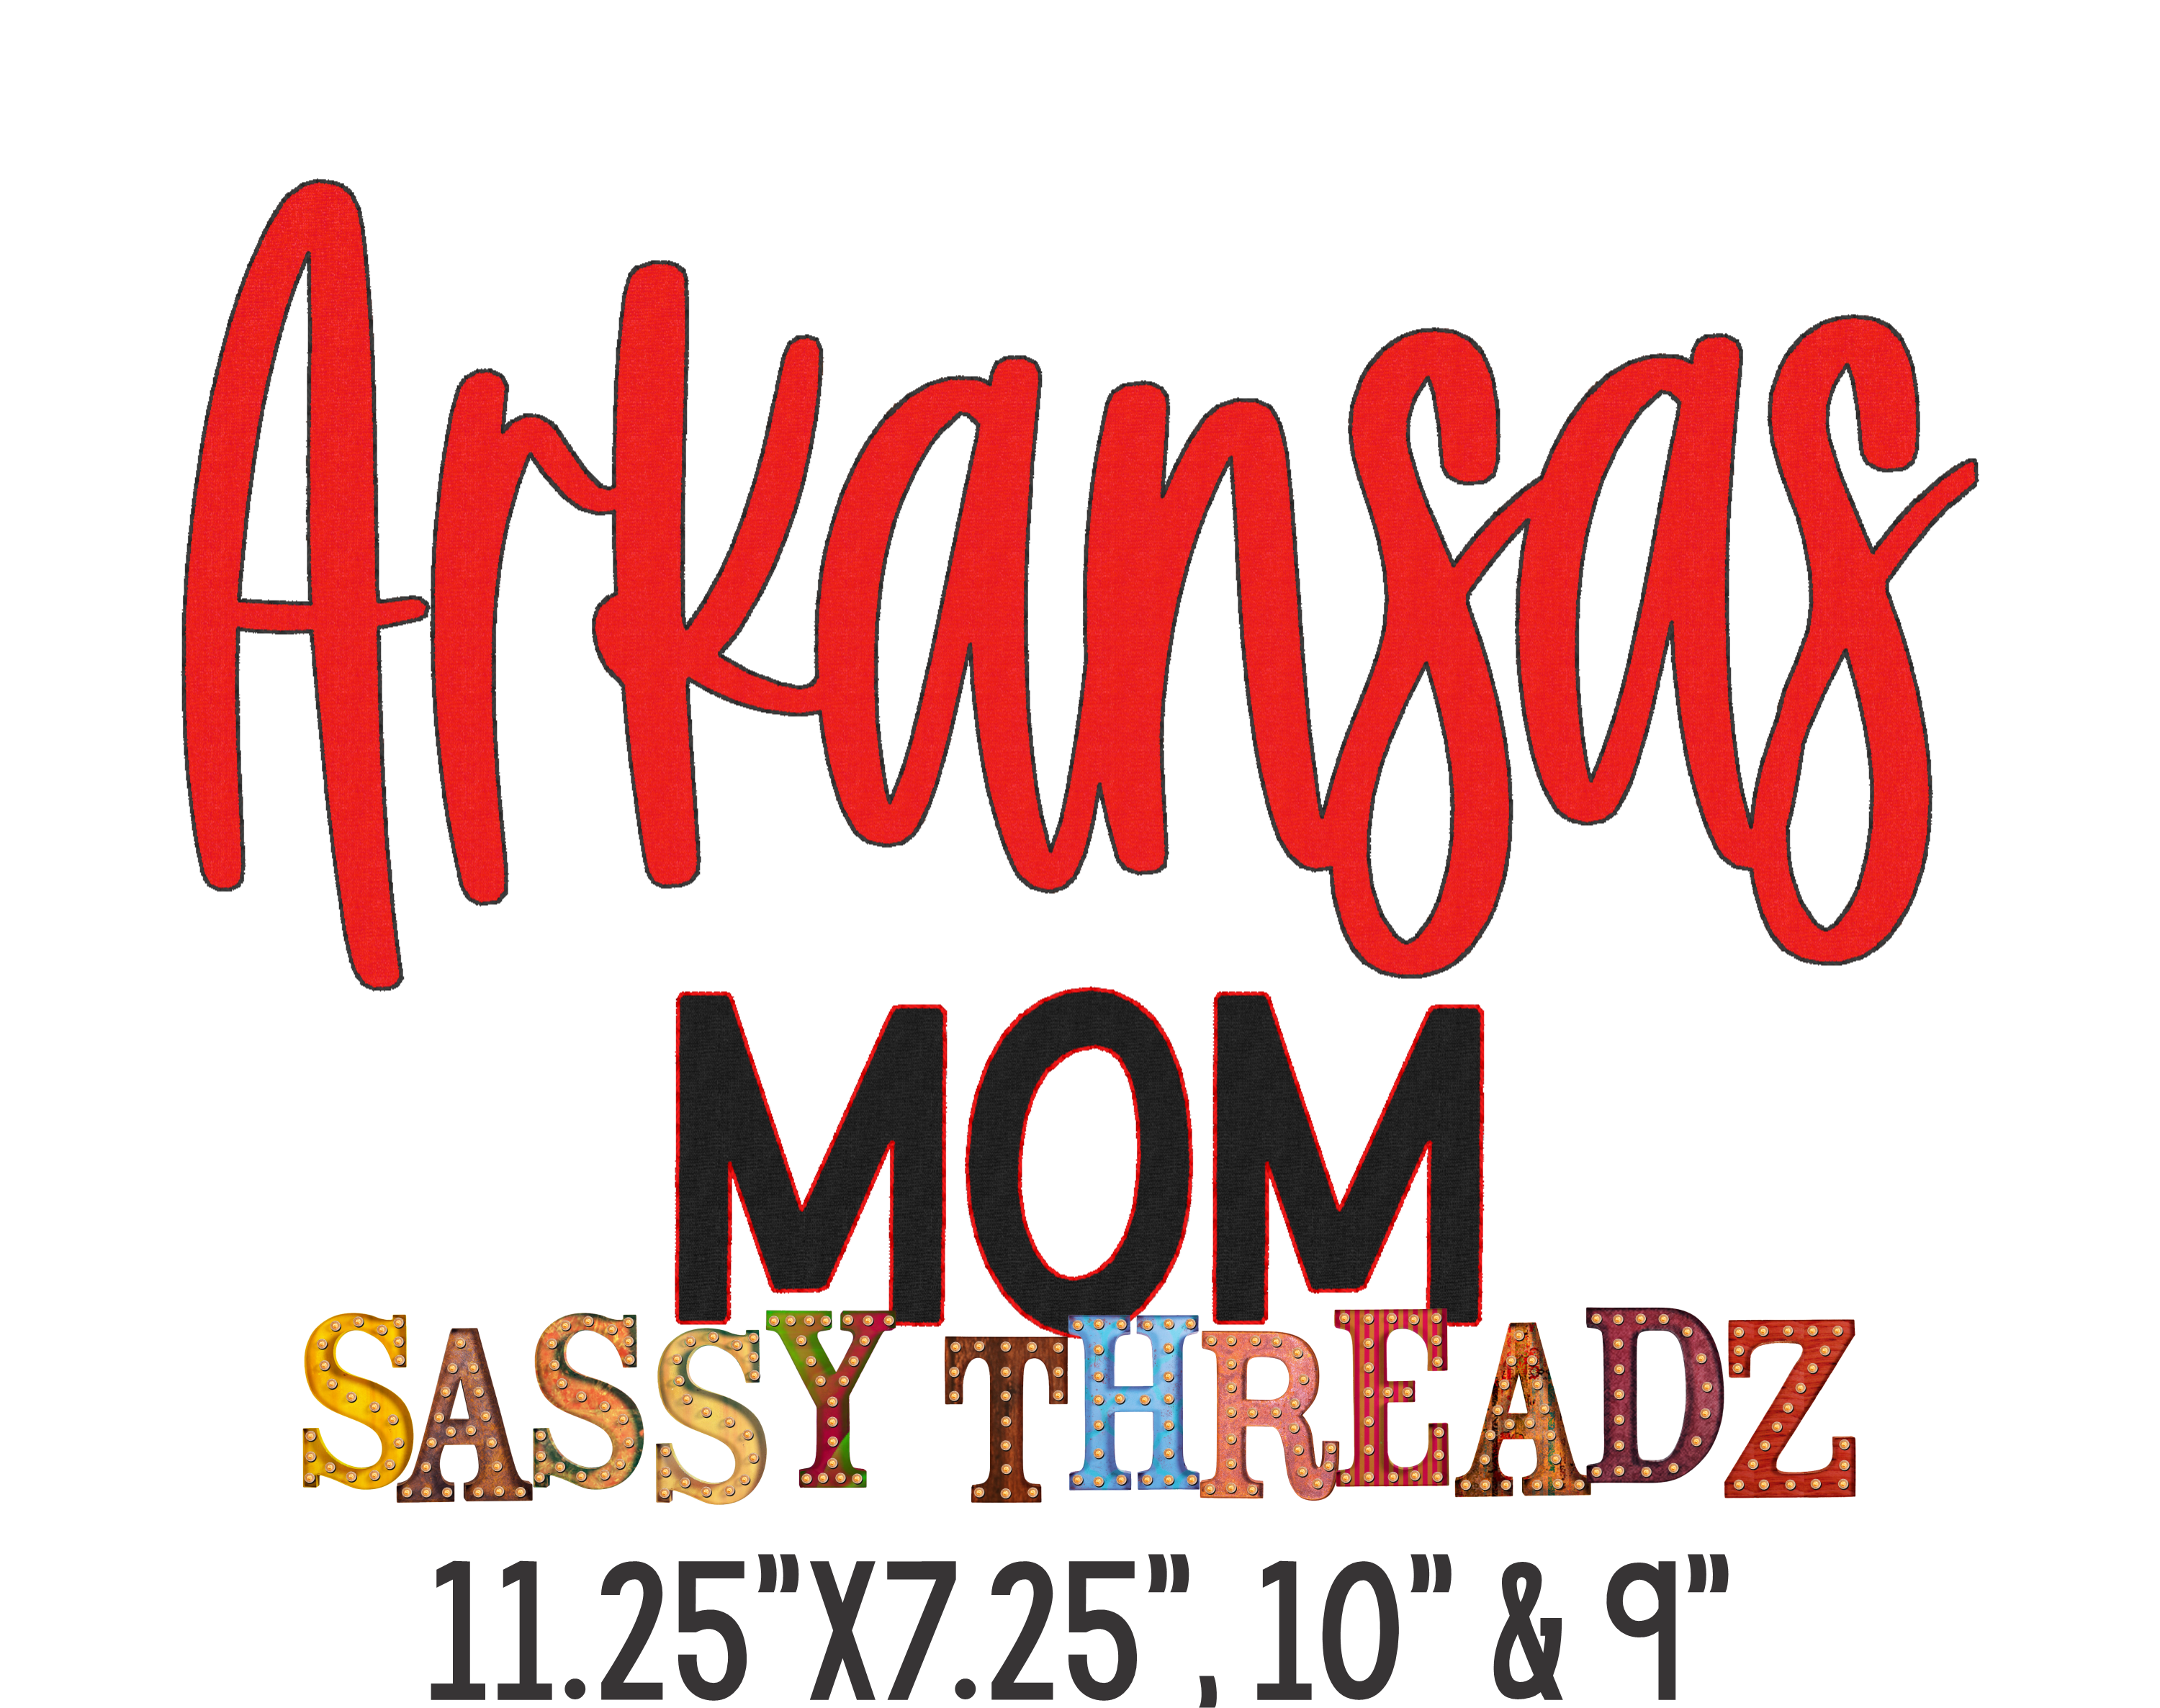 Arkansas Mom Embroidery Download - Sassy Threadz